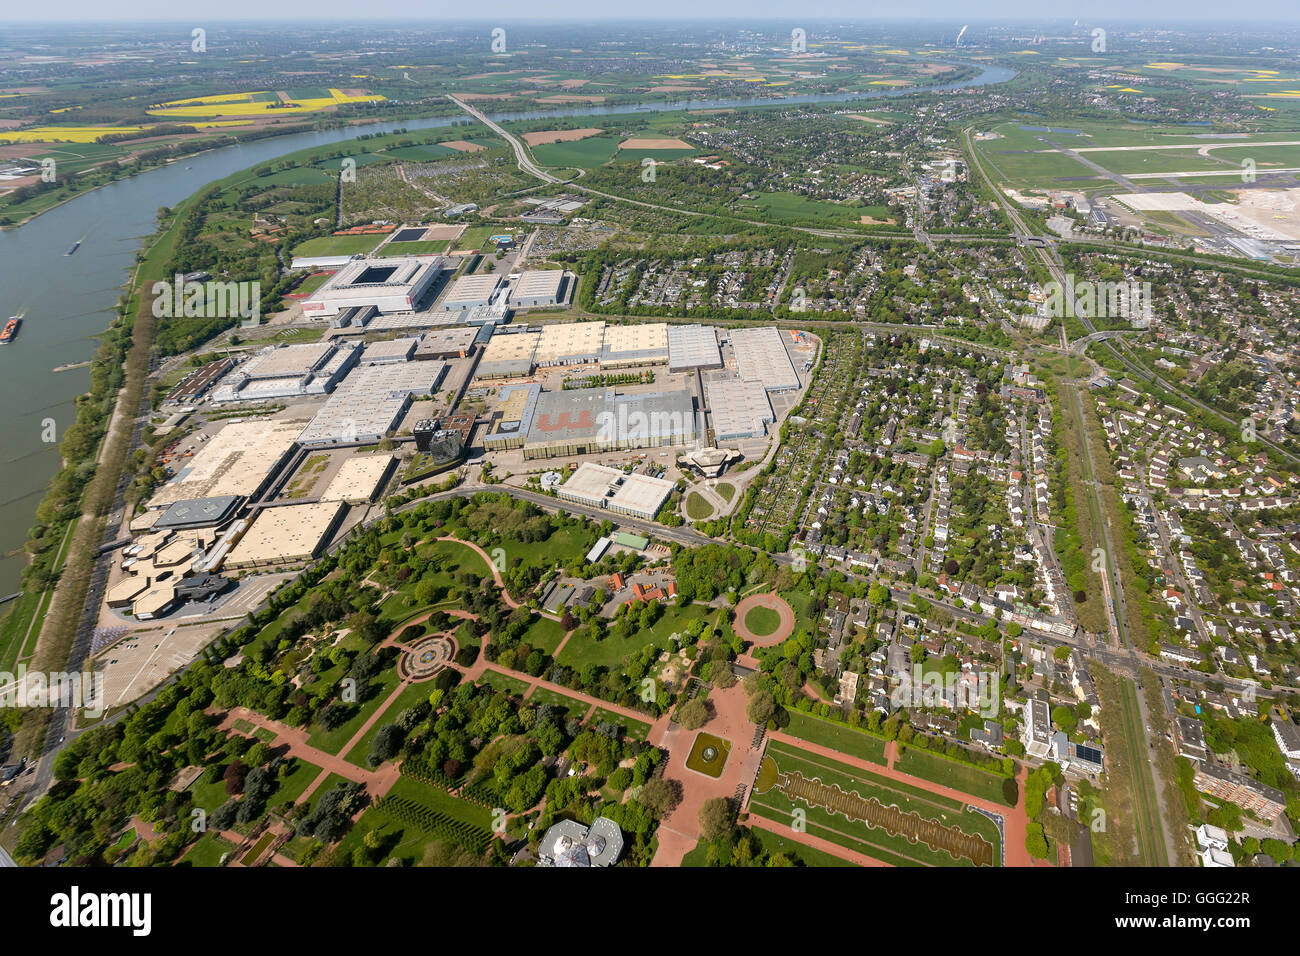 Vista aerea, la LTU Arena, Esprit Arena, Messe Dusseldorf, Stockum, foto aerea, aree di Dusseldorf foto aerea, Foto Stock